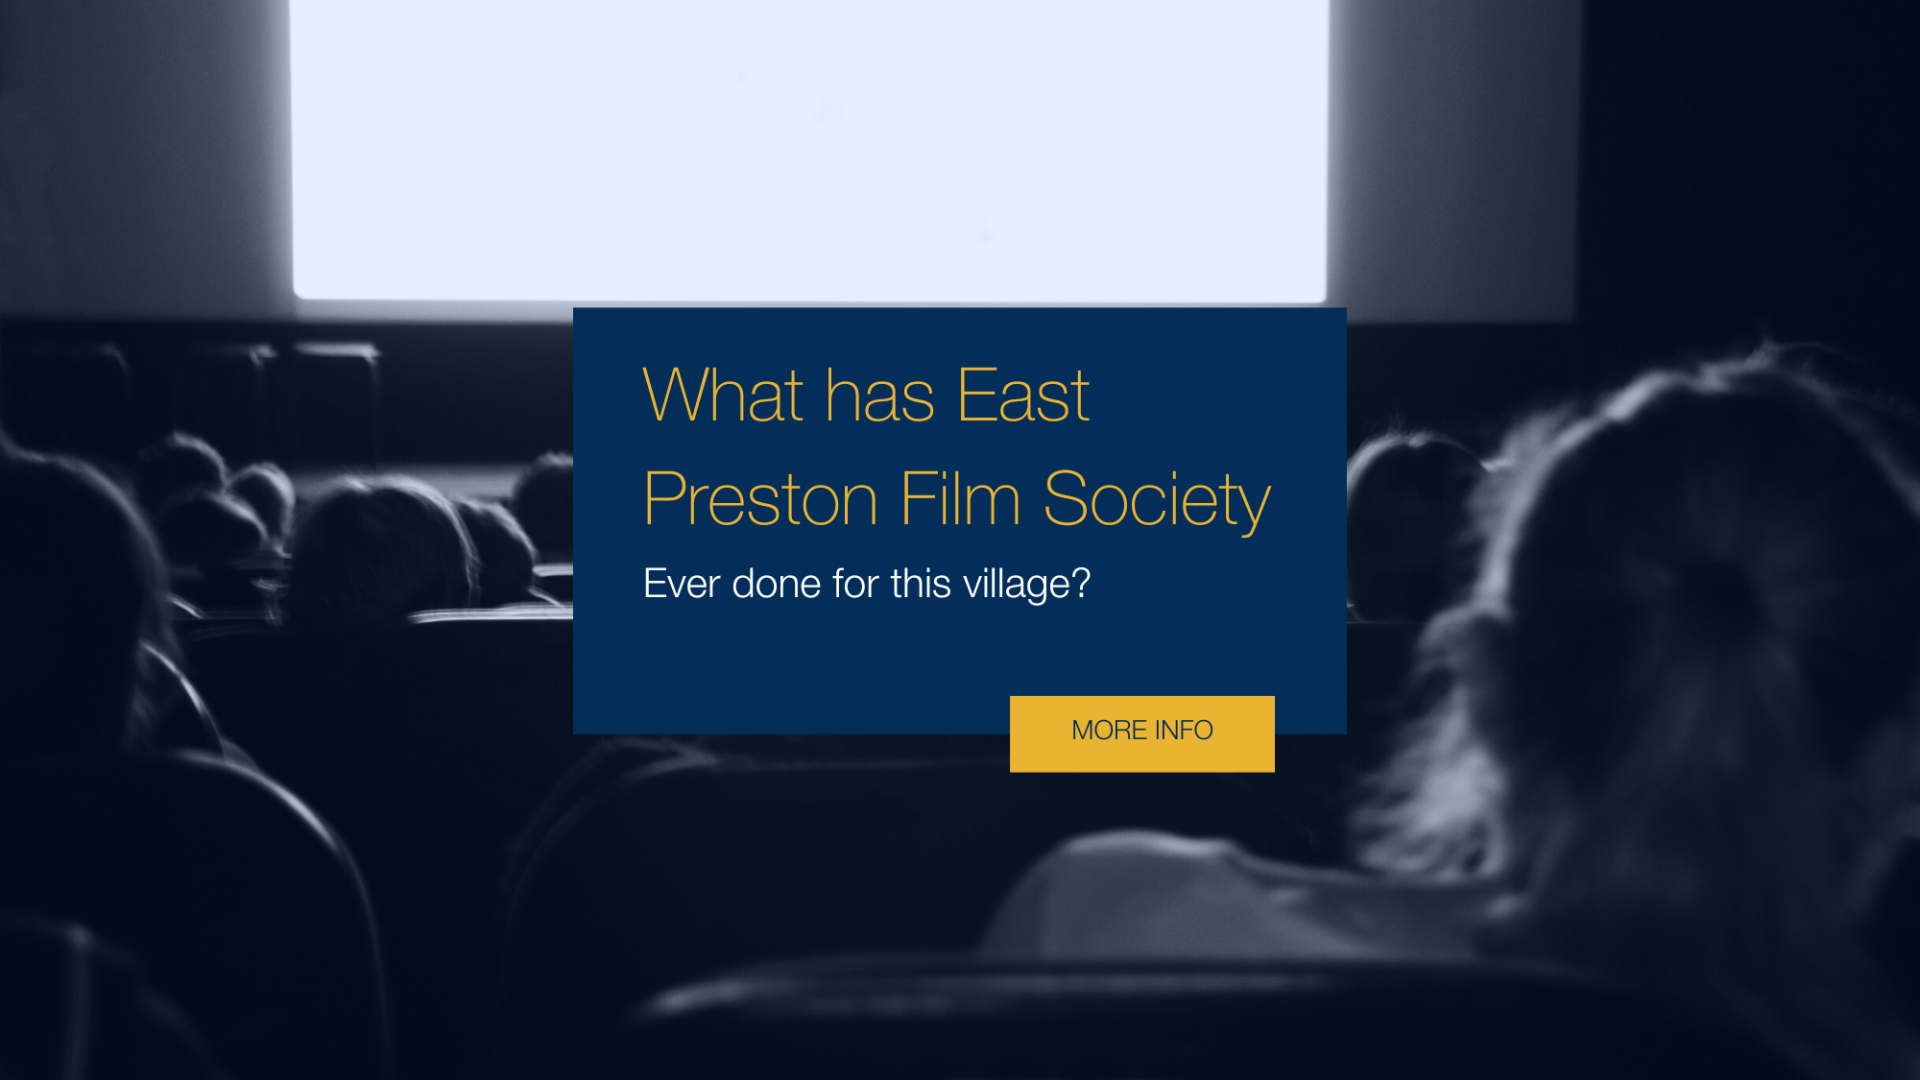 East Preston Film Society